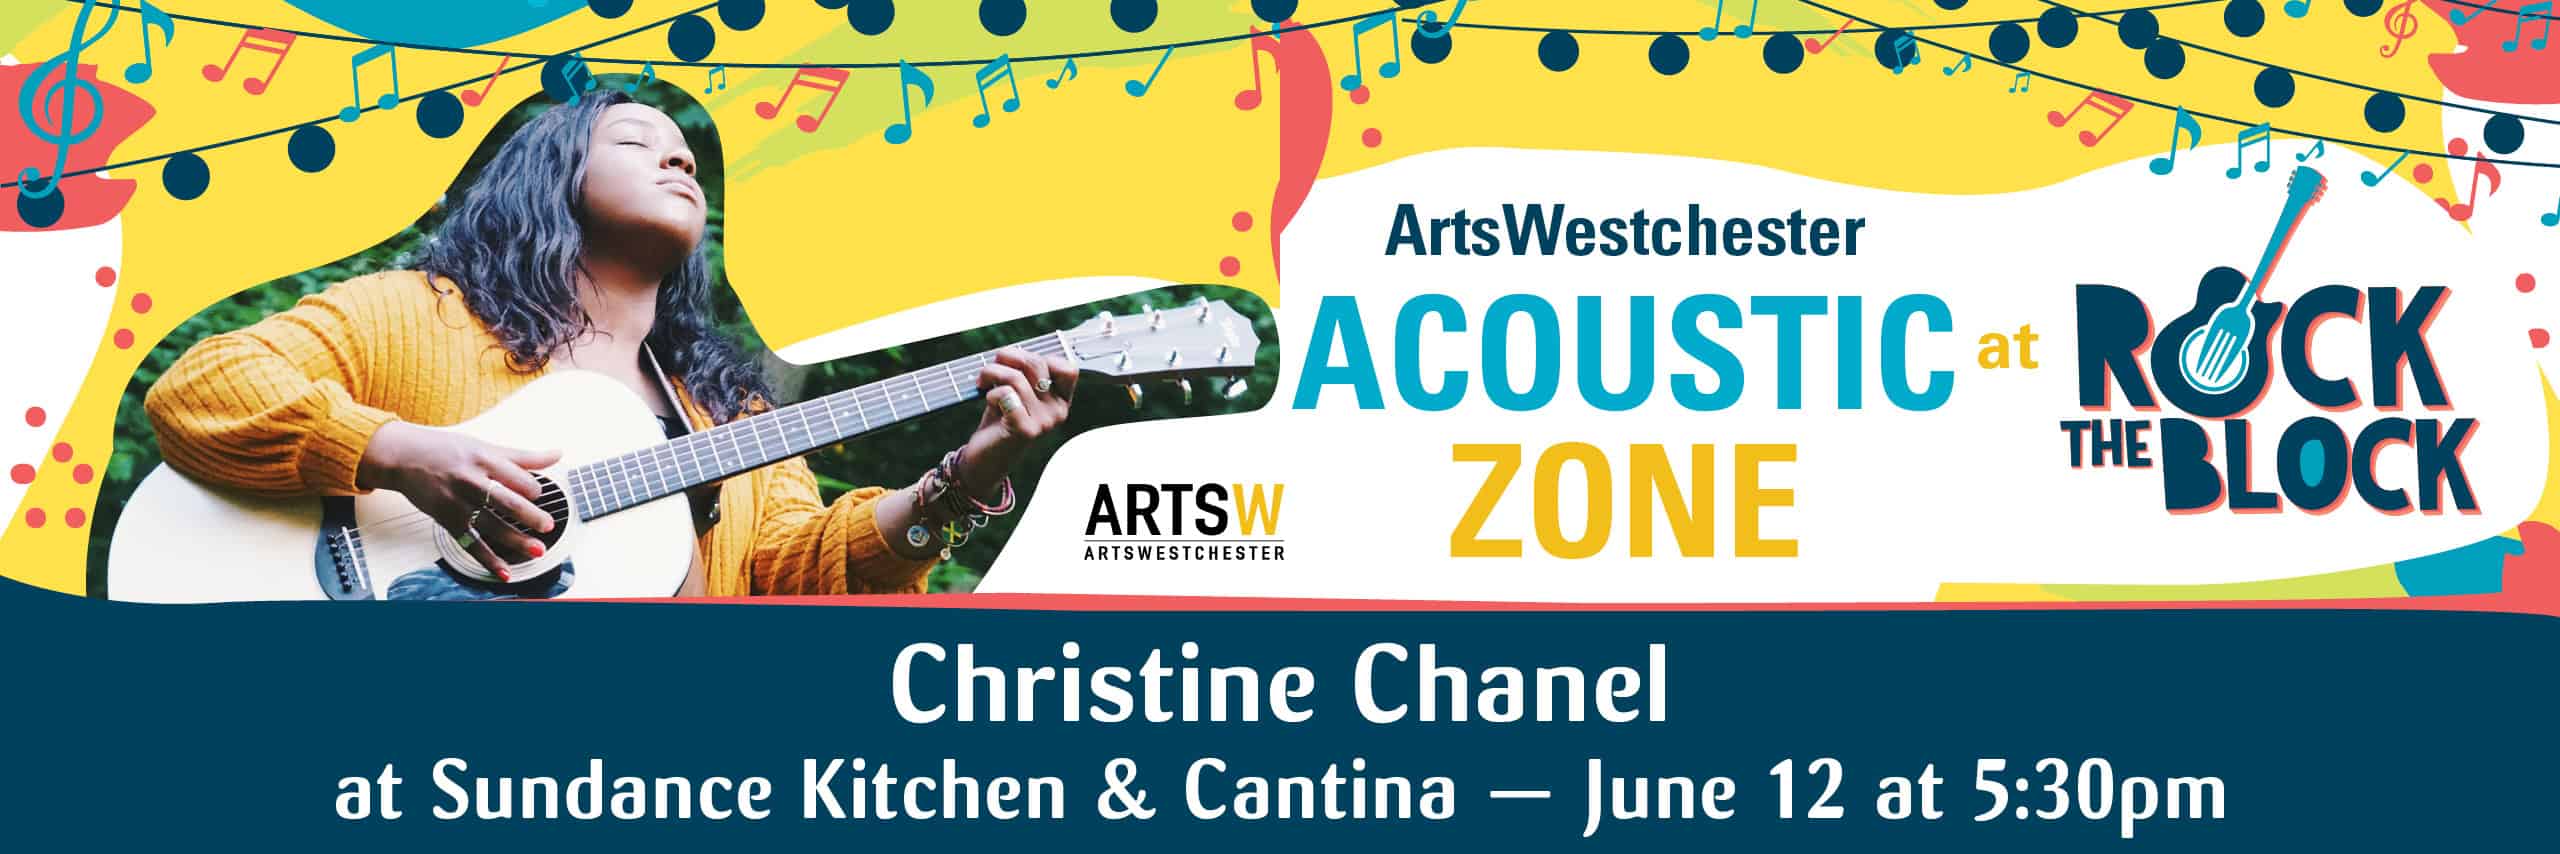 ArtsWestchester Acoustic Zone